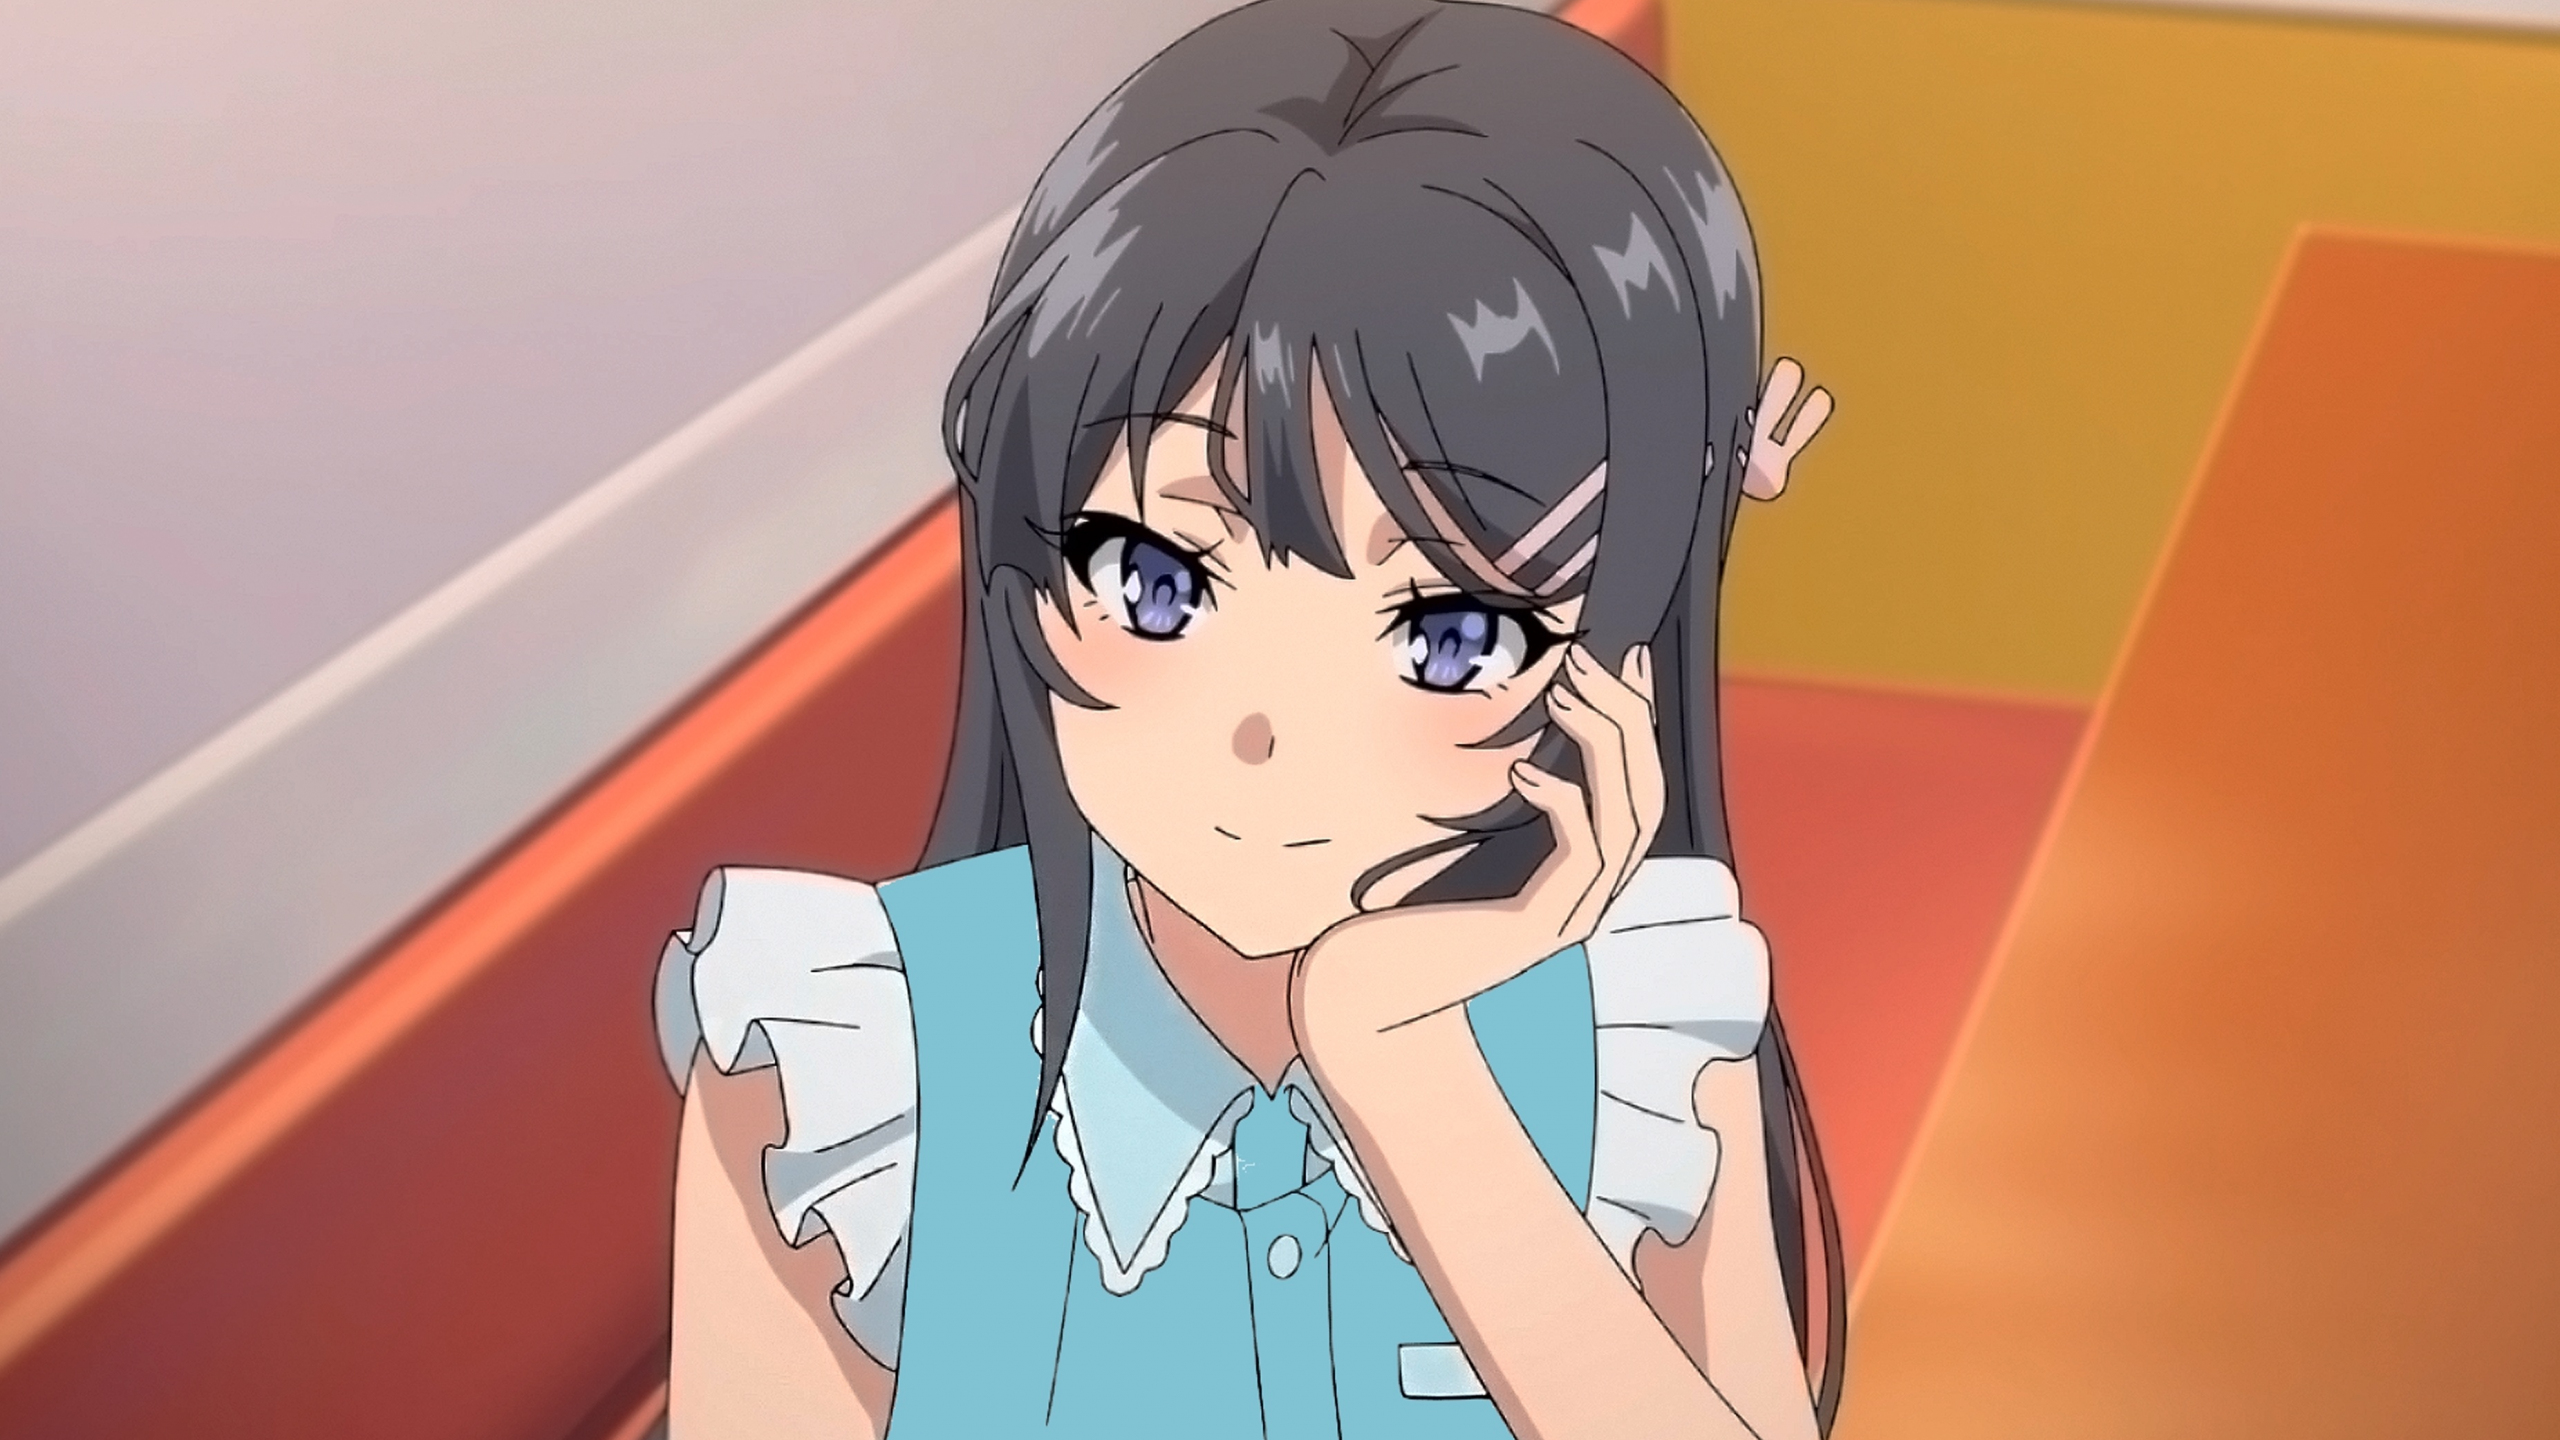 Download 2560x1440 Wallpaper Cute Anime Girl Sakurajima Mai